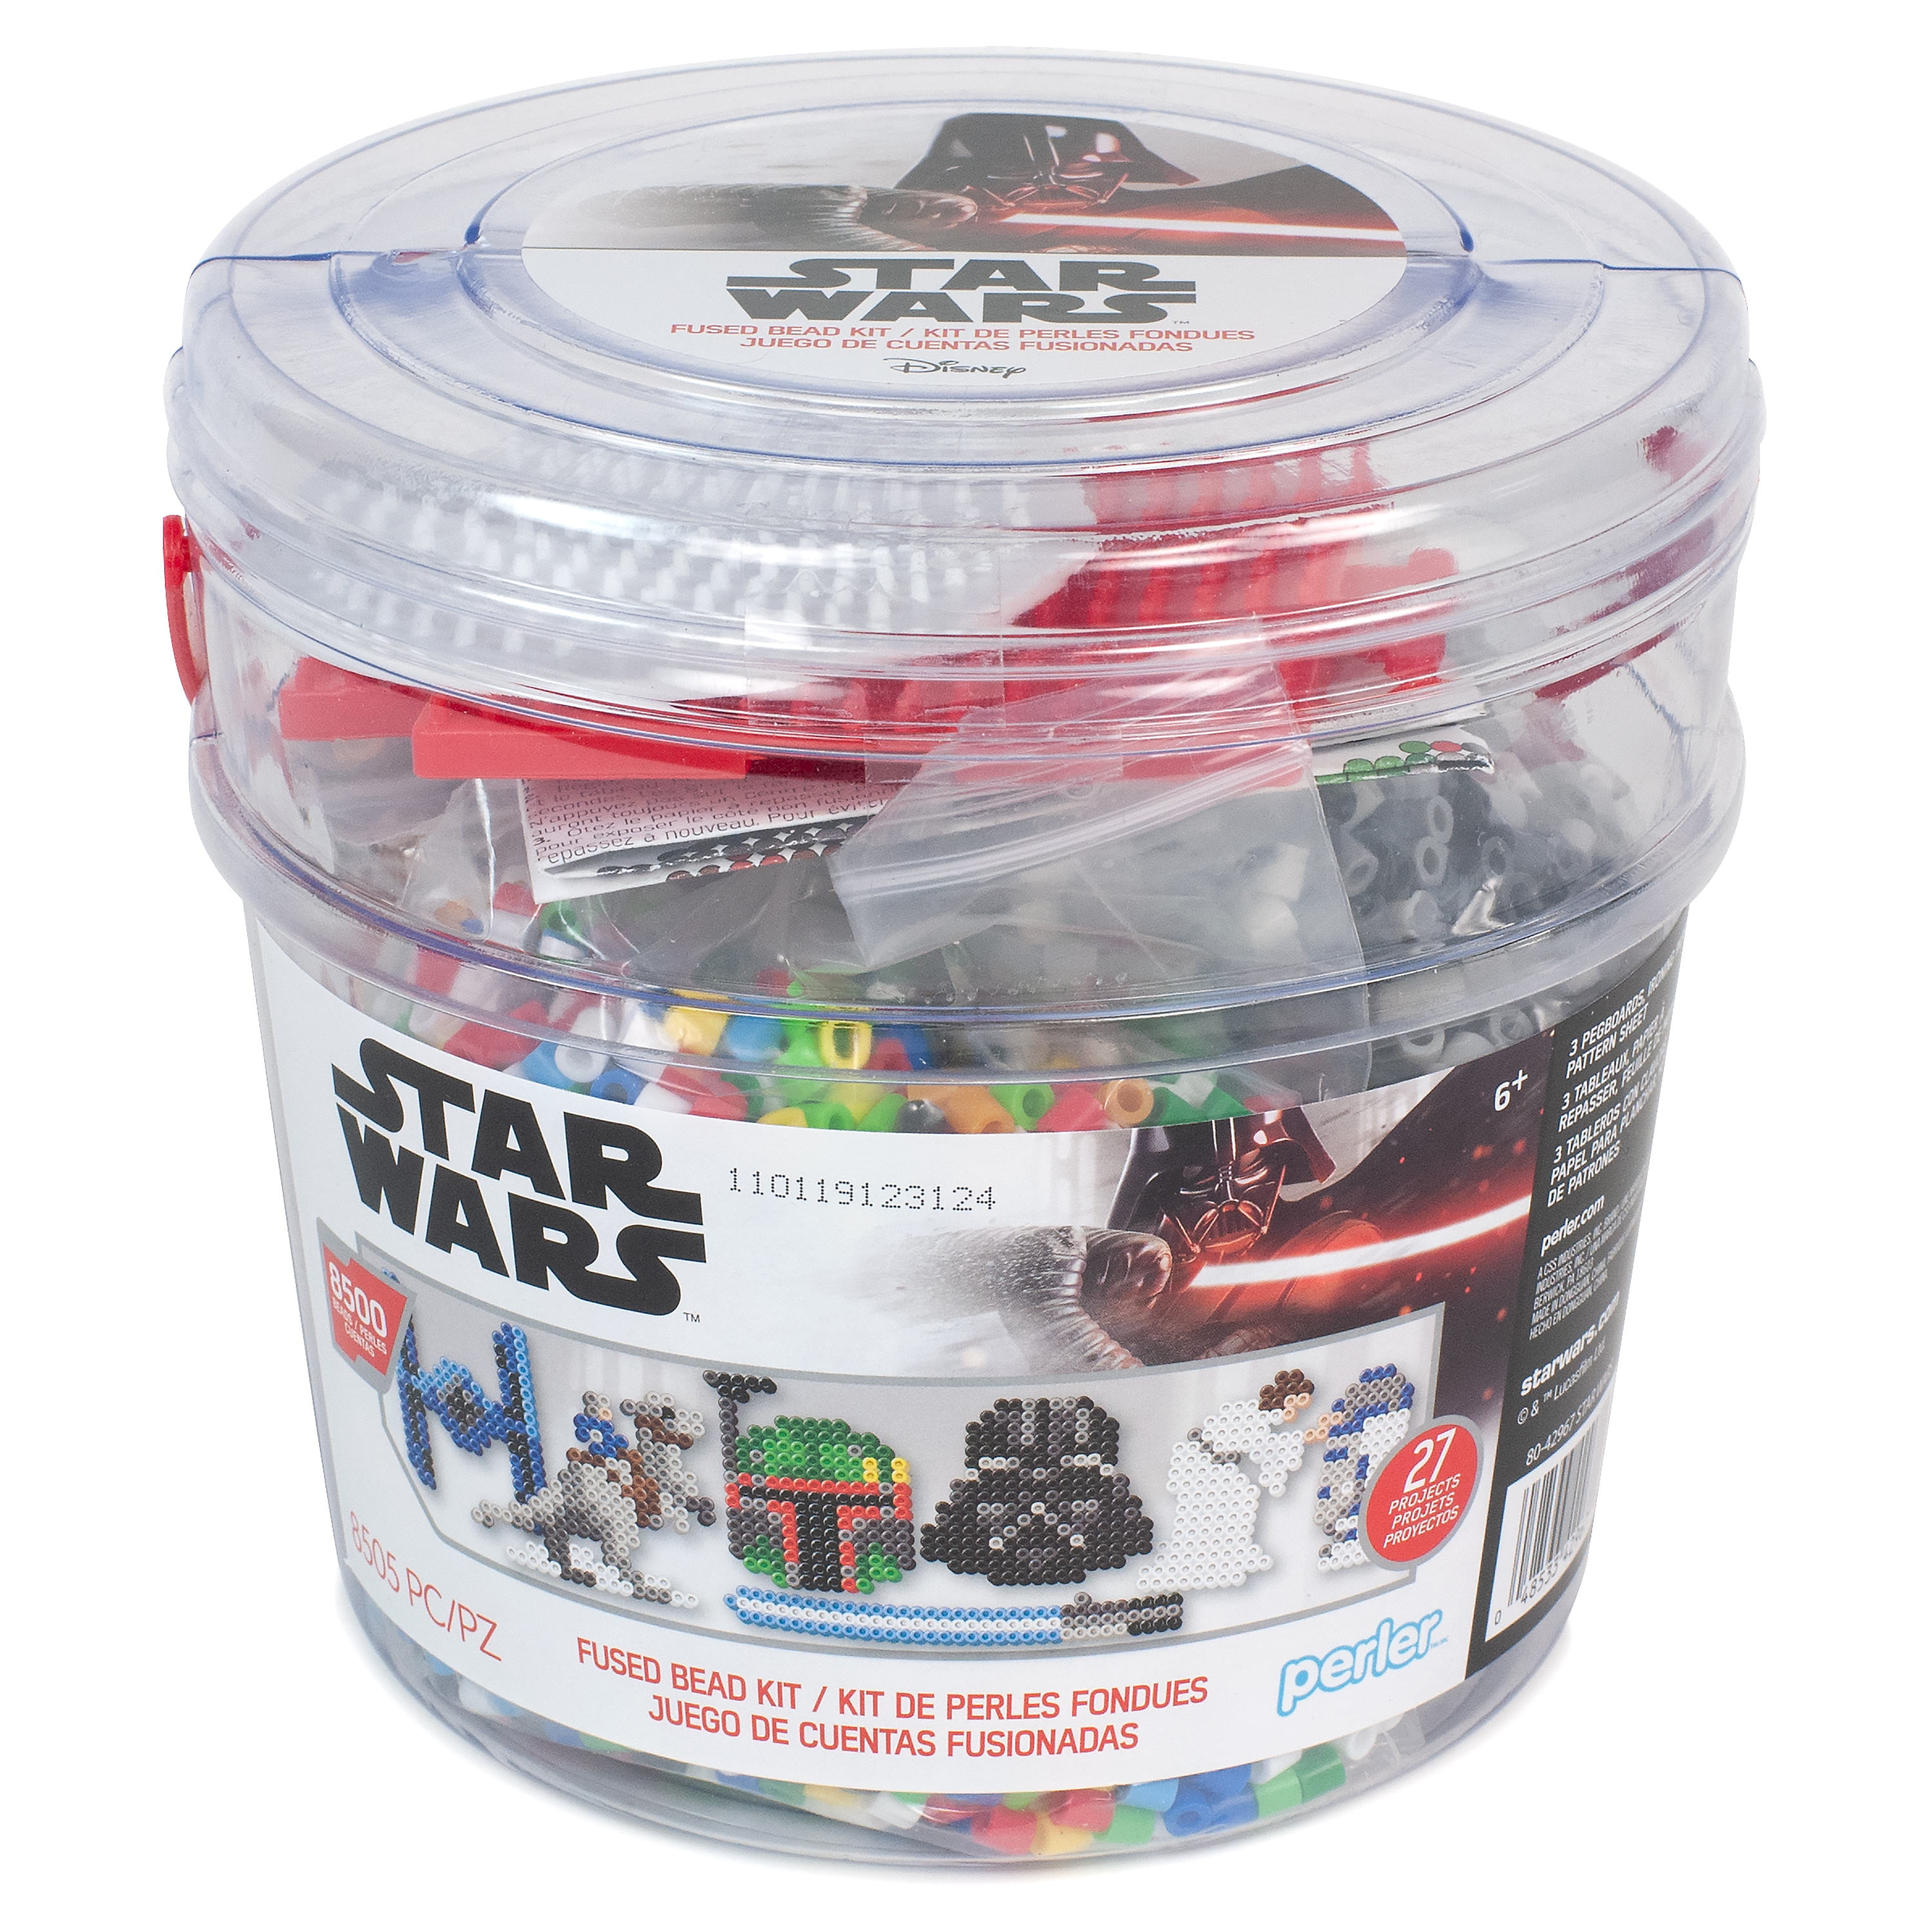 8505-Piece Perler Star Wars Fused Bead Bucket $15 + Free S&H w/ Walmart+ or $35+